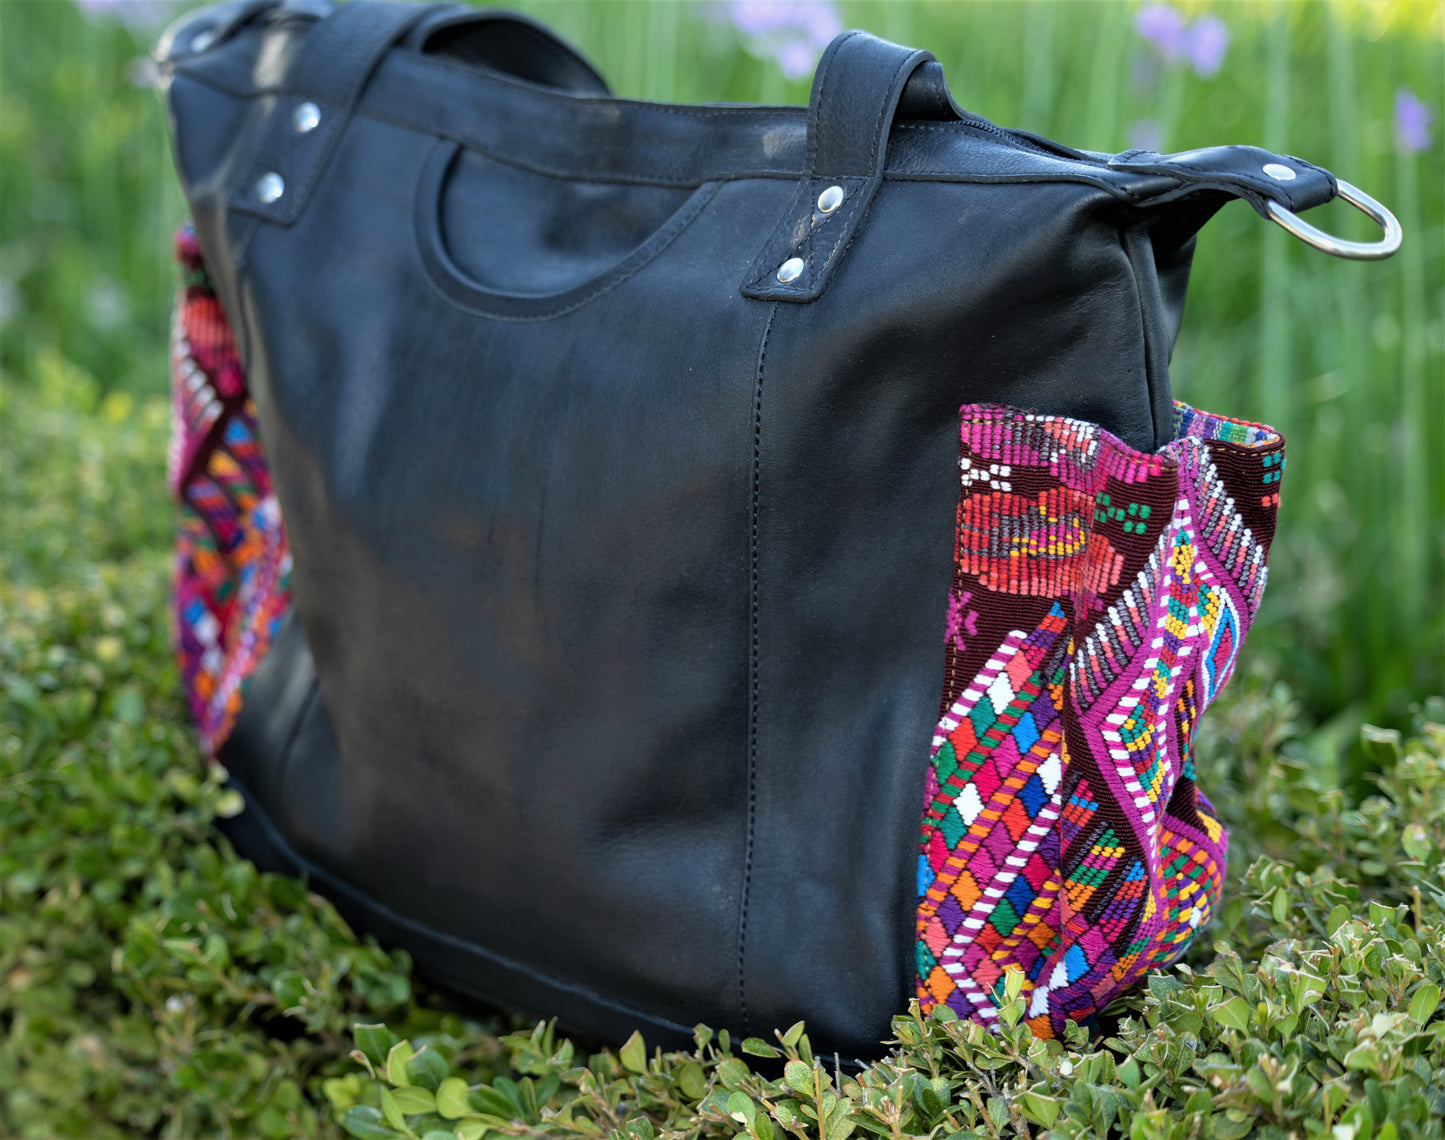 Artisan Bag Convertible Day Bag 100% black full grain leather with huipil pockets